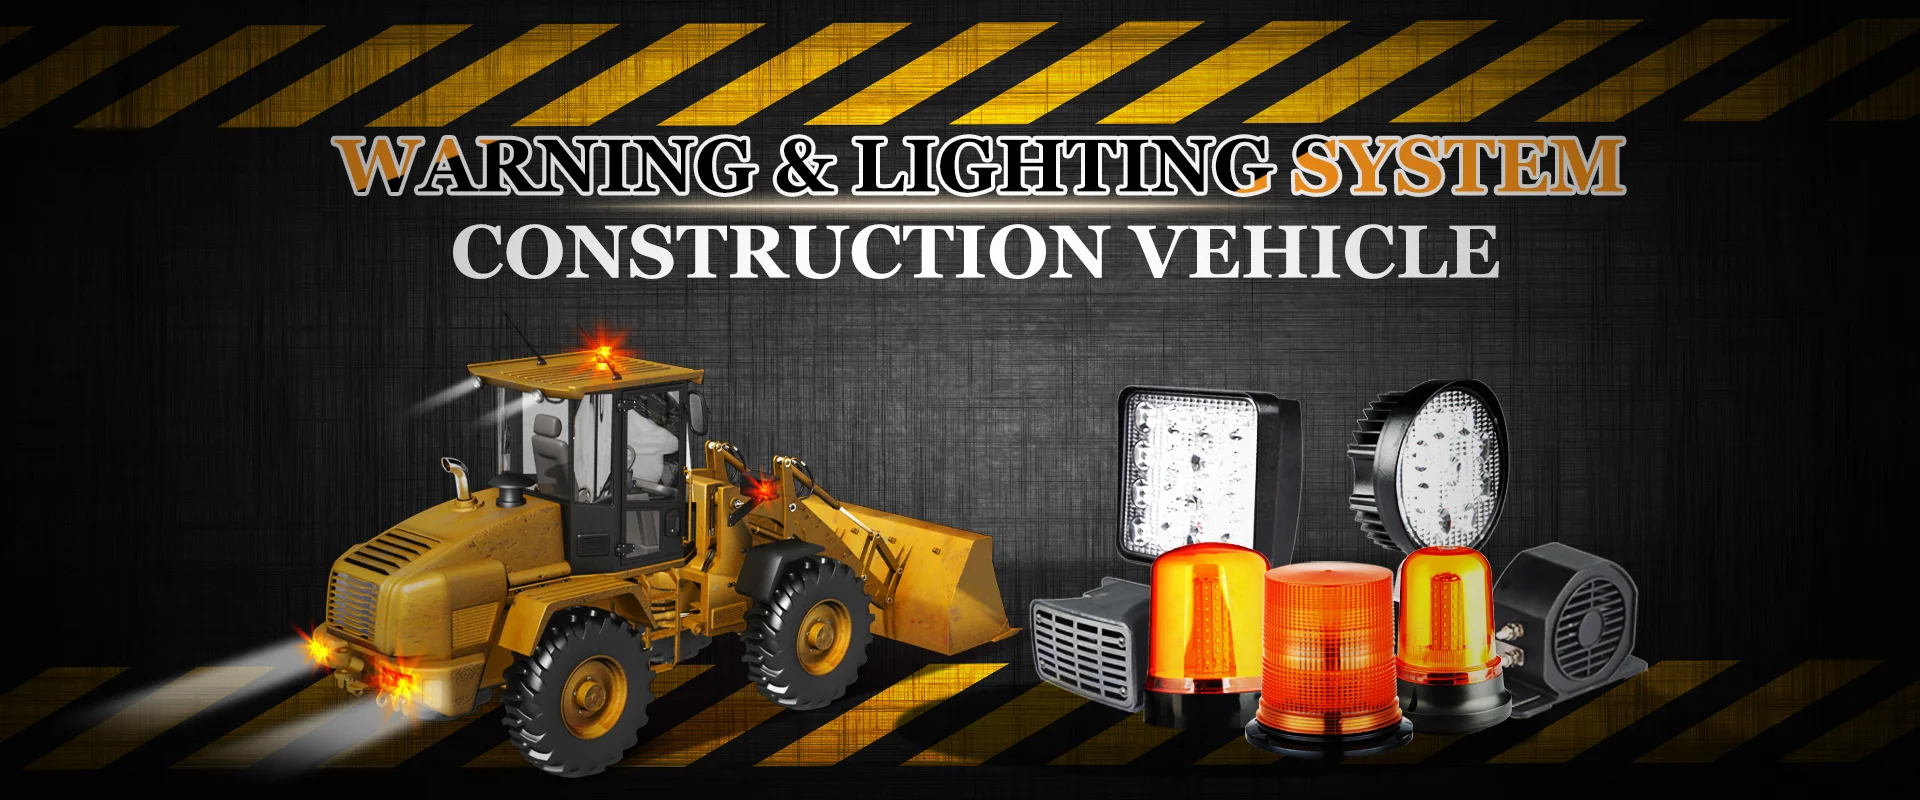 Construction Vehicle Warning Lights